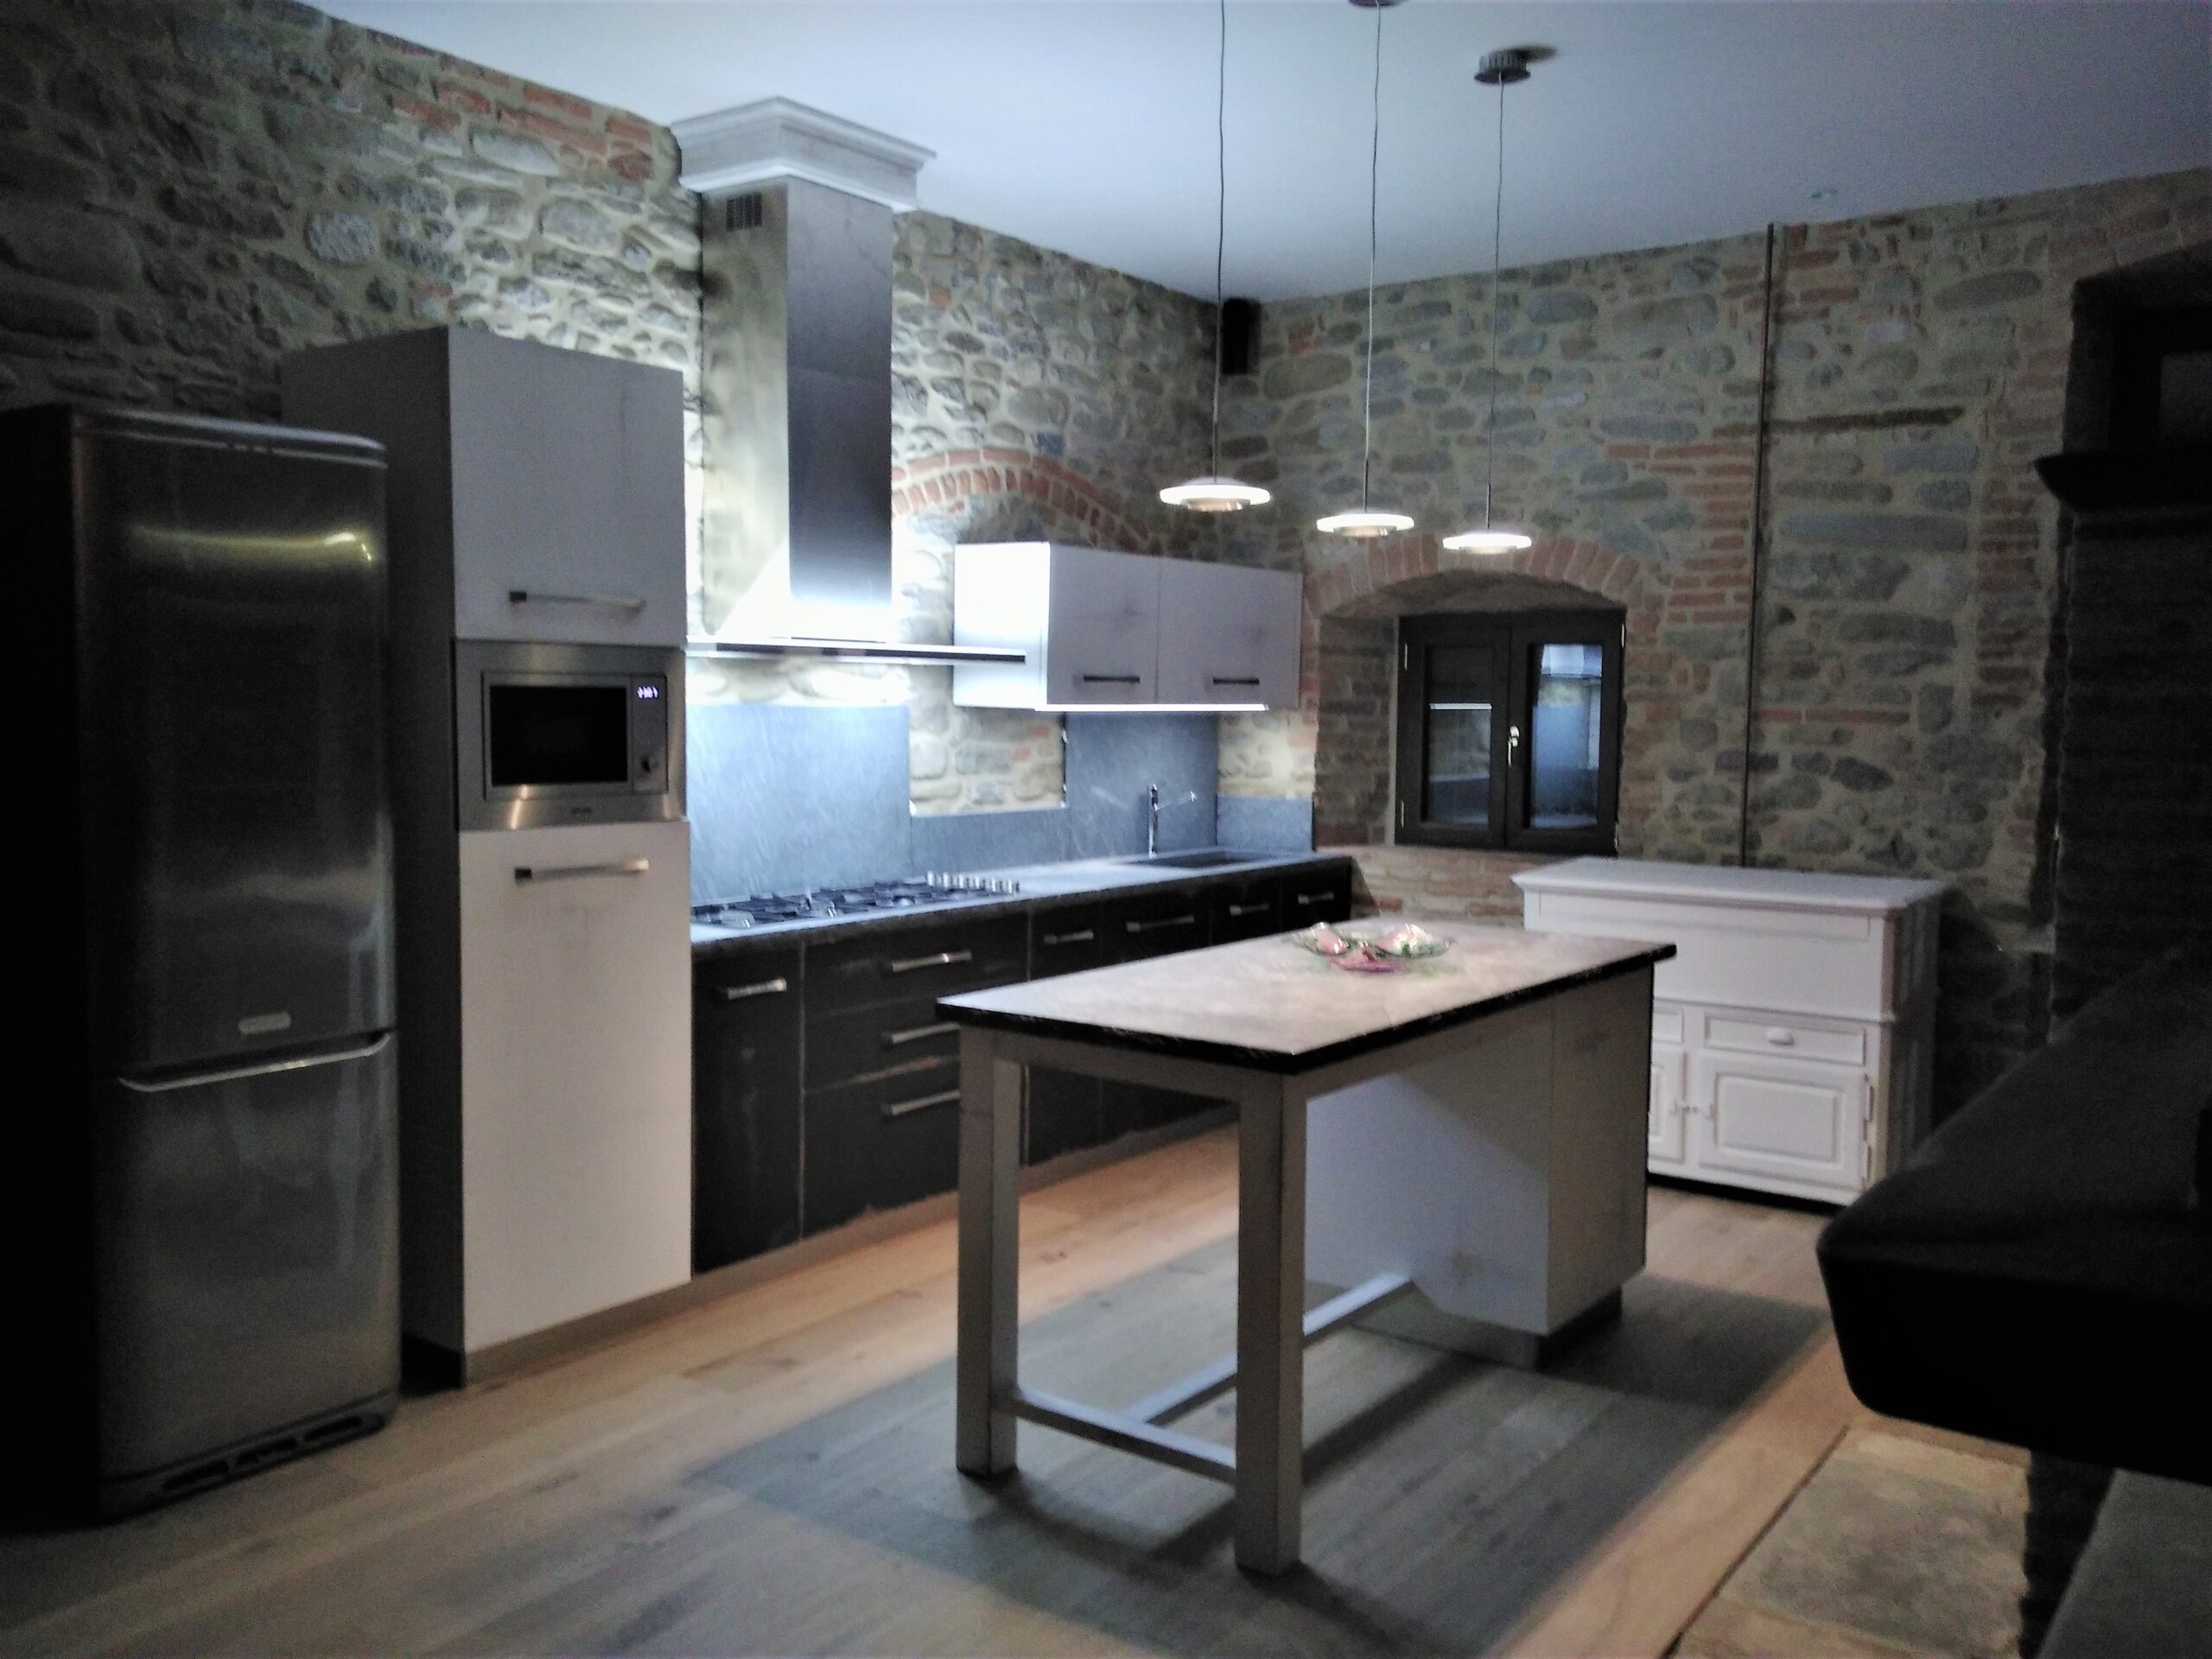 Immagine di cucina moderna con pietra.